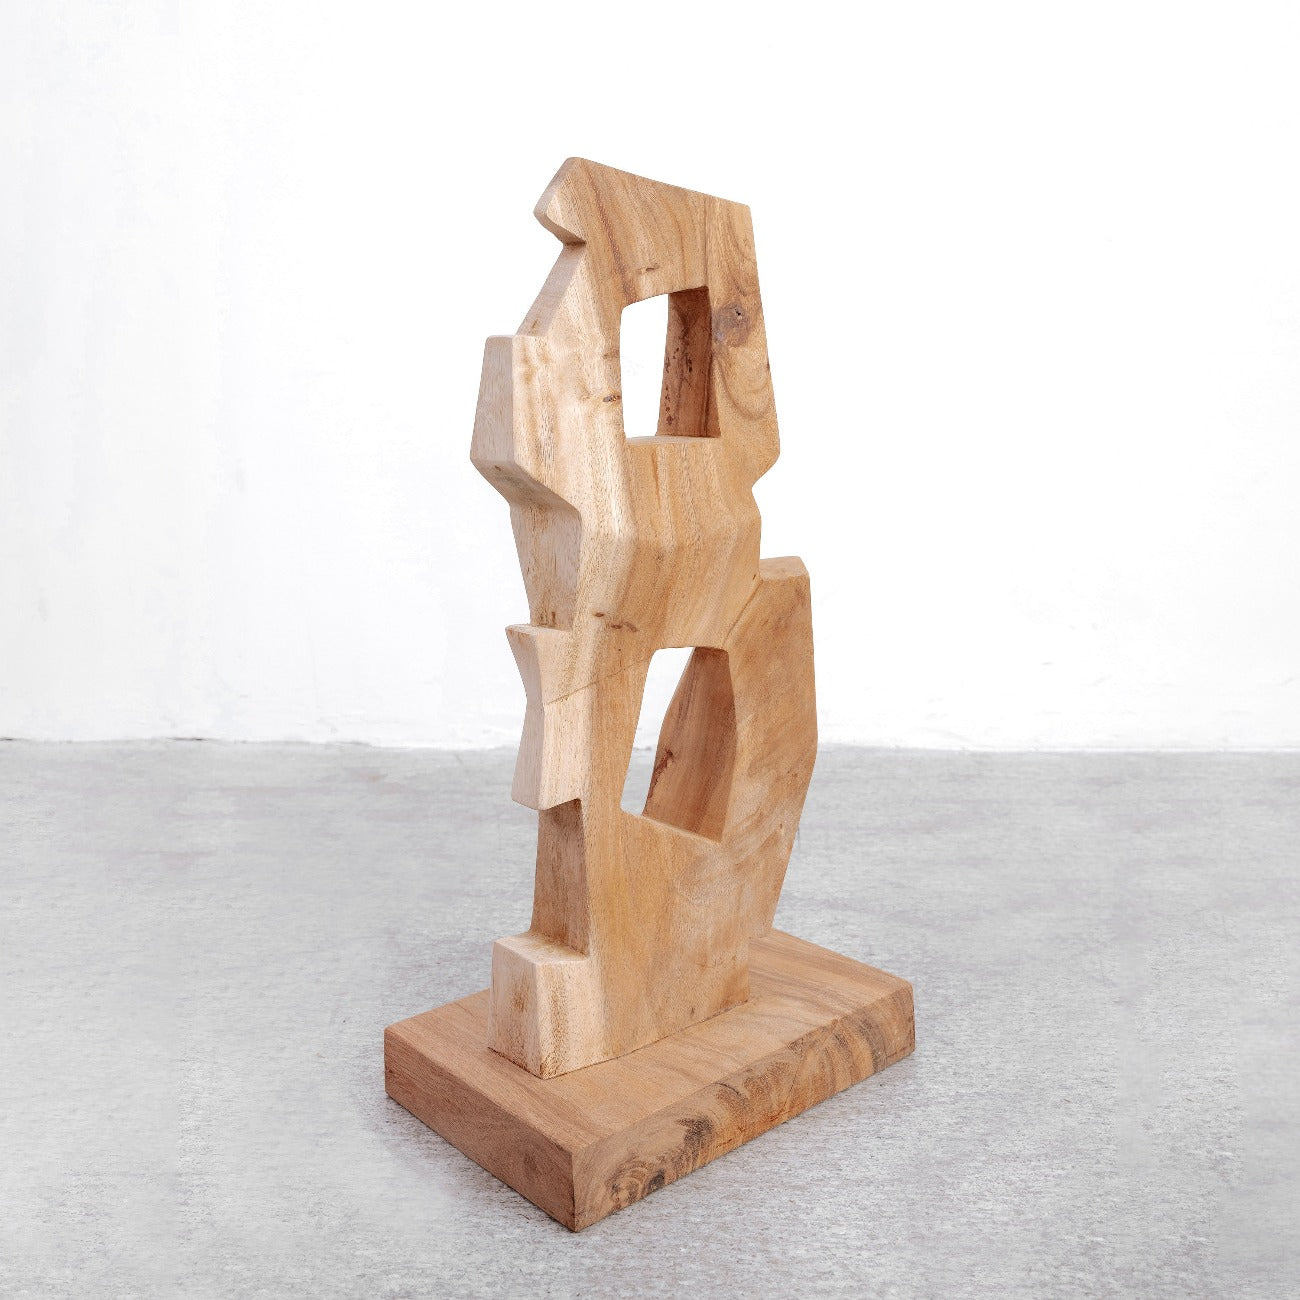 France & Son, Melite Wood Sculpture